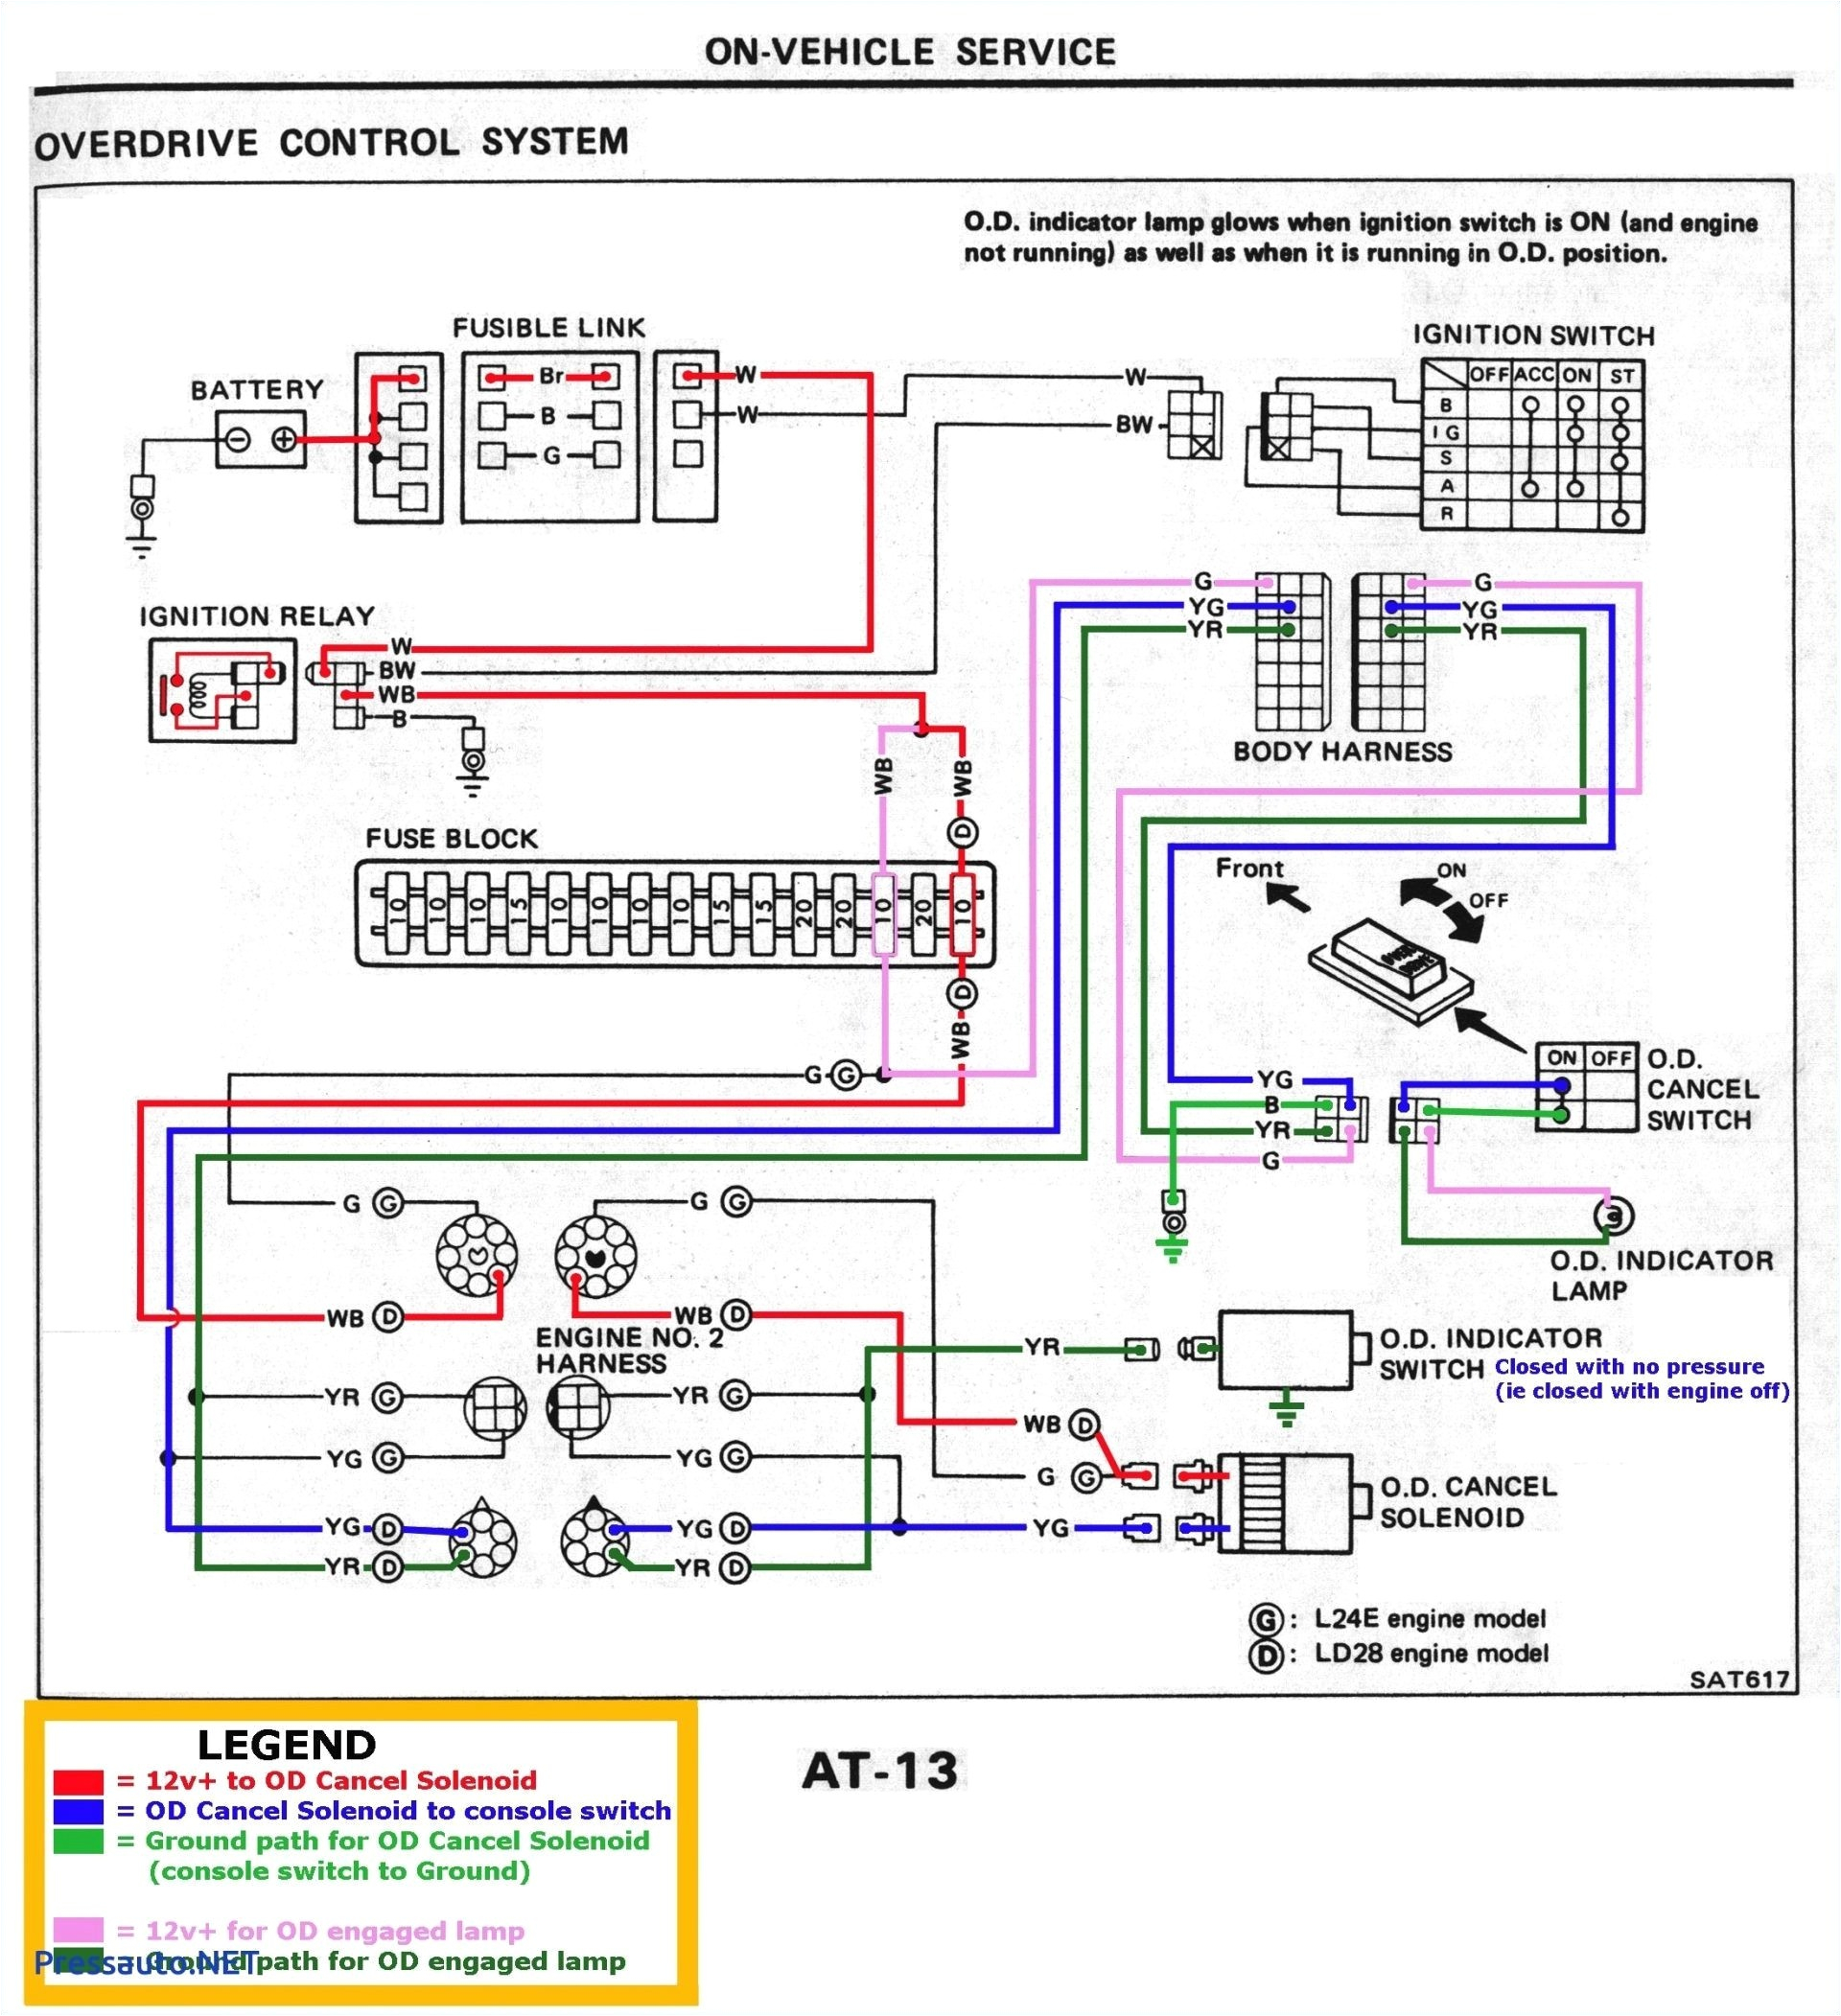 fz700 wiring diagram wiring diagramfz700 wiring diagram wiring diagramsfz700 wiring diagram manual e book fj1200 wiring